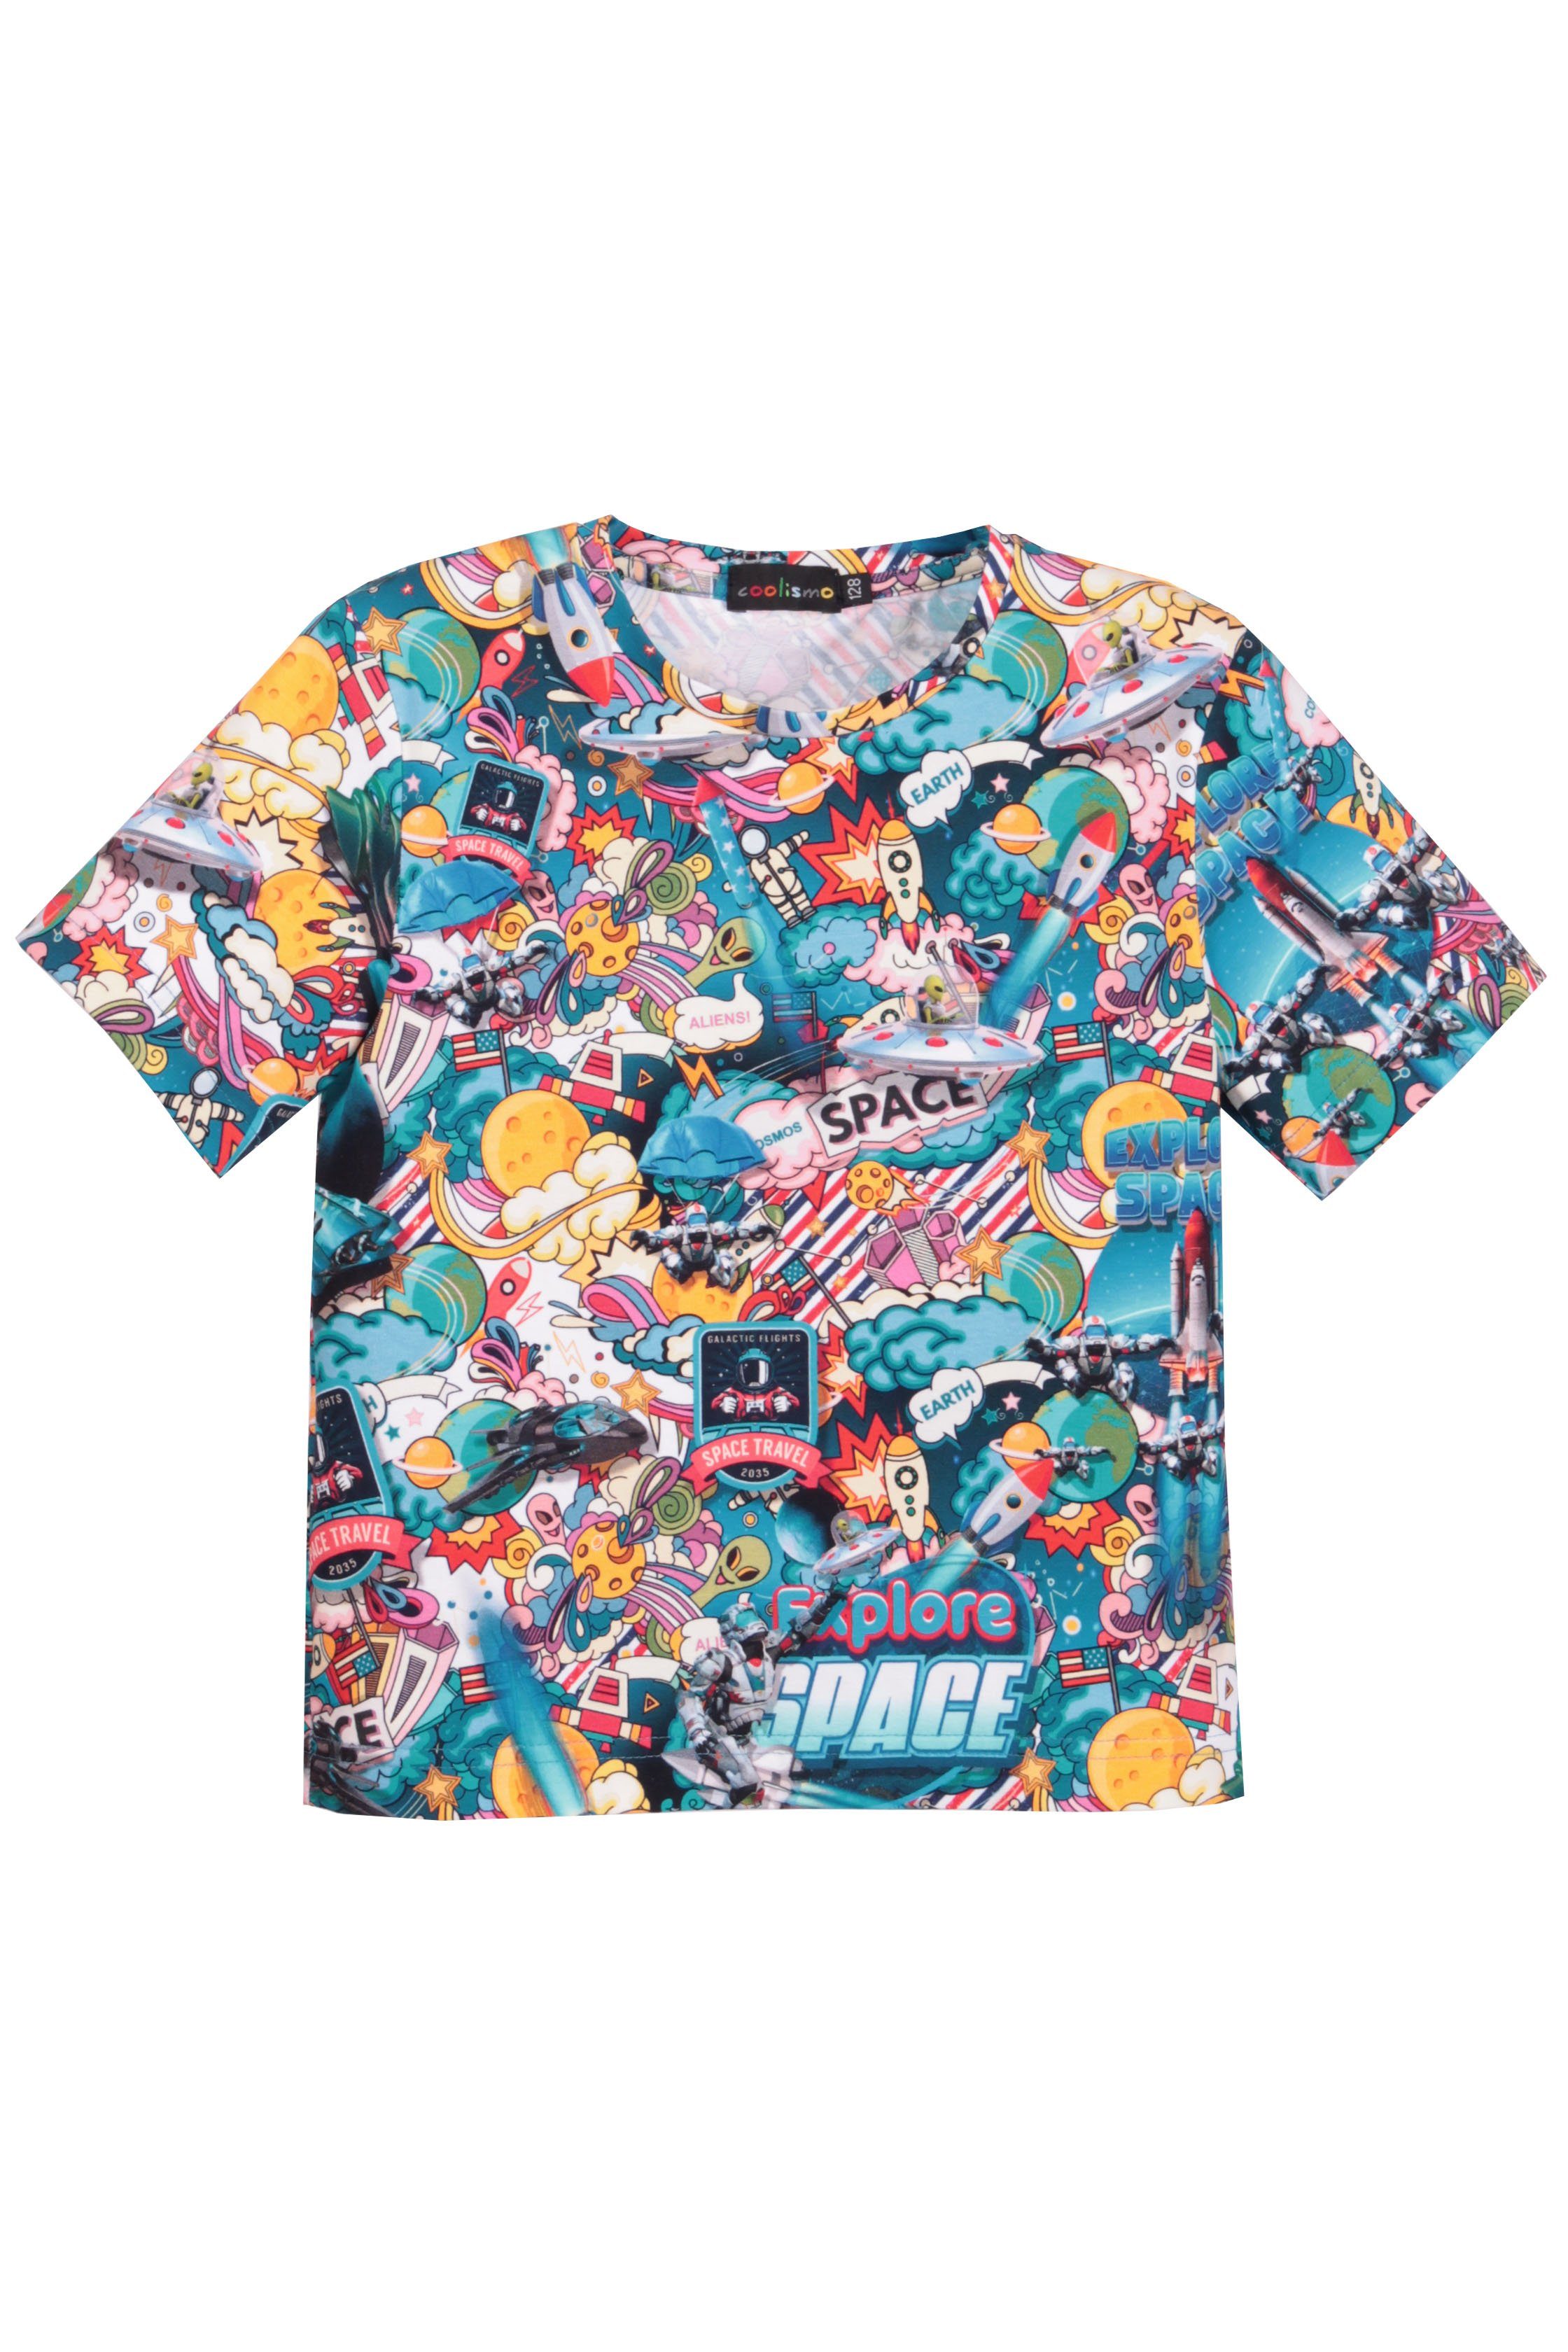 coolismo Comic-Raketen-Motiv Alloverprint, Print-Shirt T-Shirt Rundhalsauschnitt, Jungen für mit Baumwolle